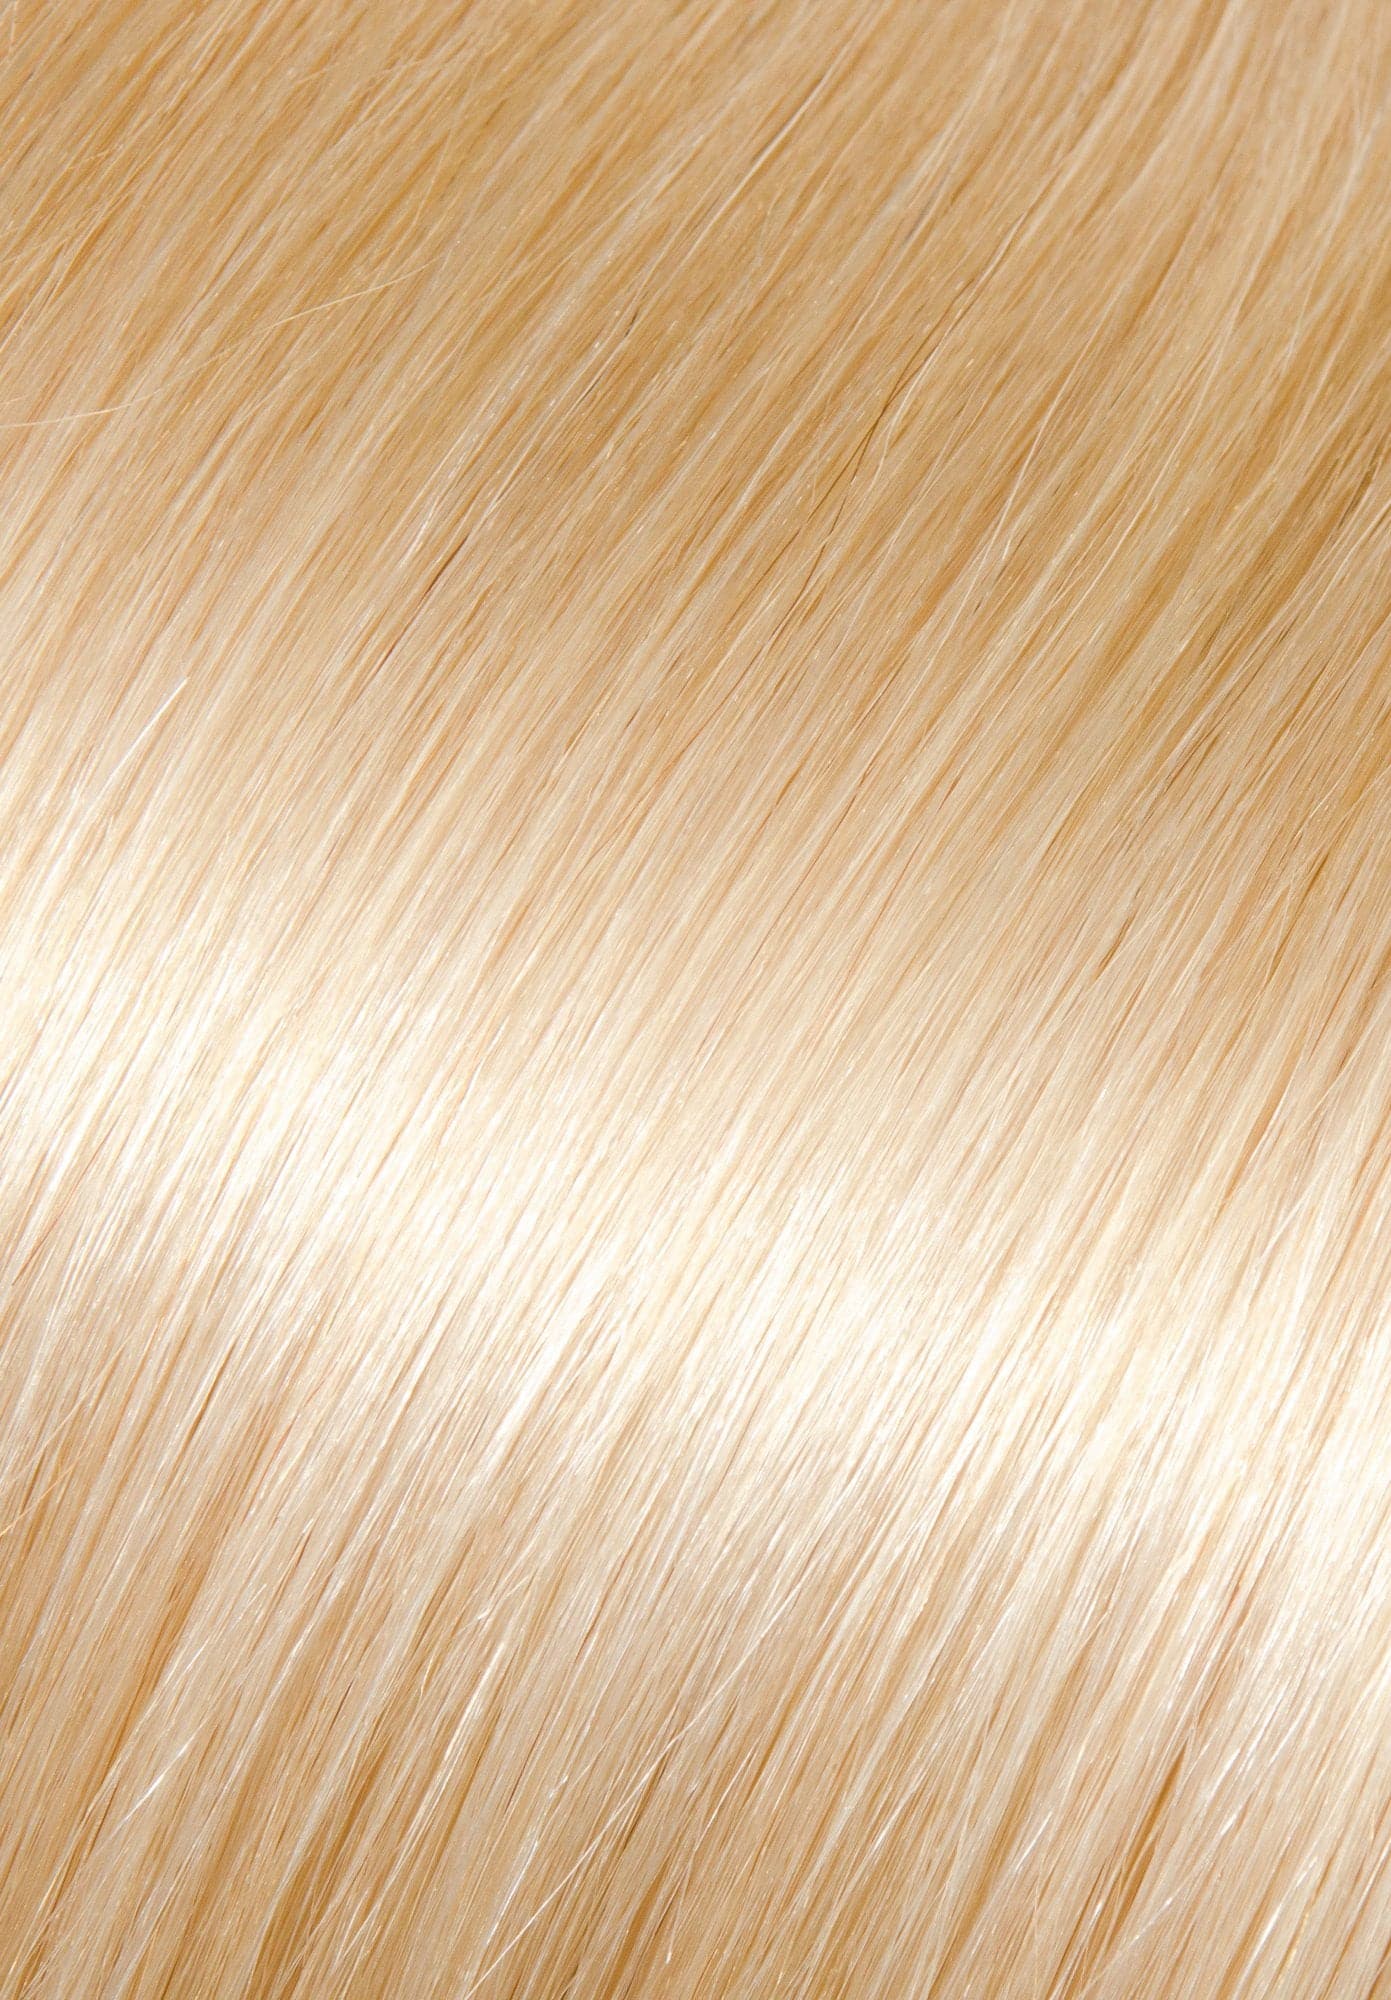 Kera-Link Pro Curly Color #1001 Platinum Blond